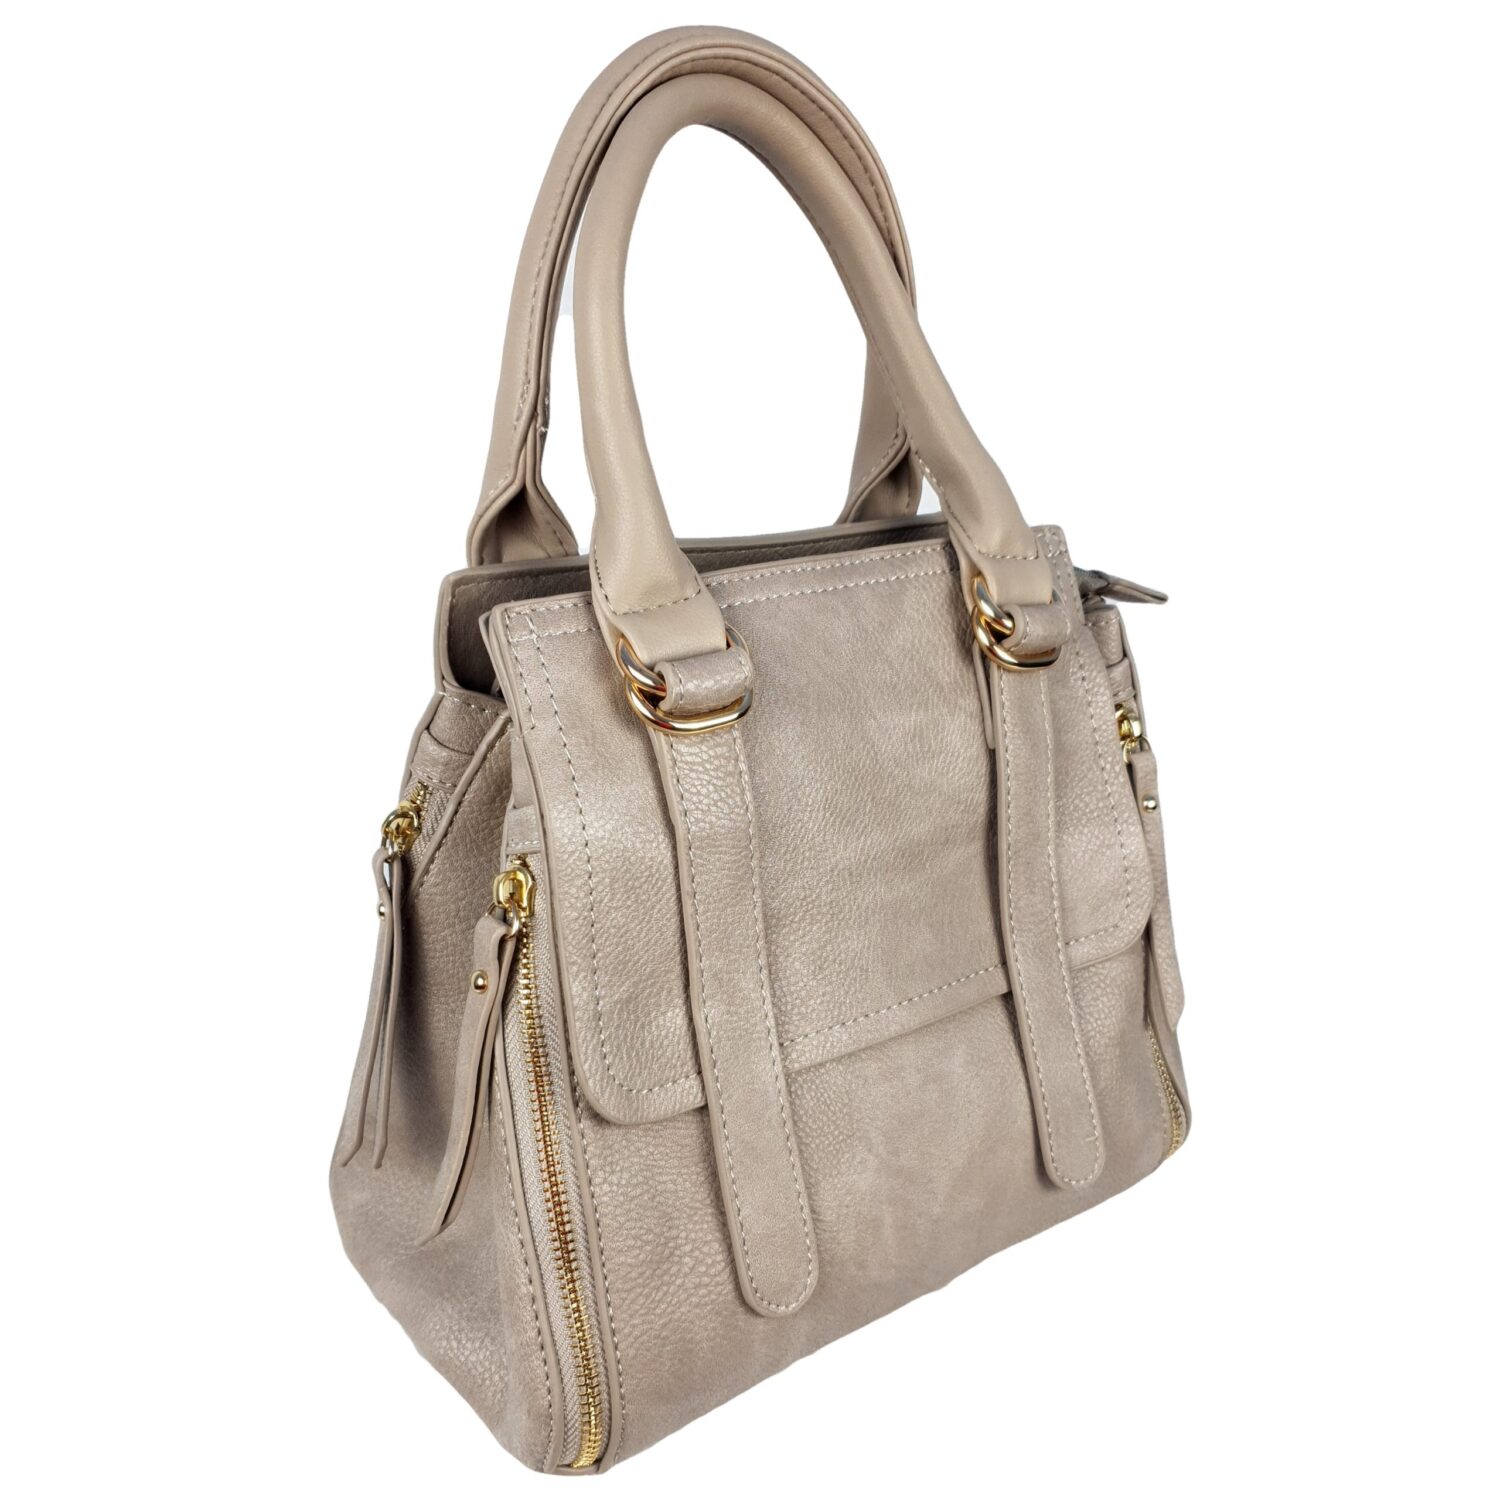 Grey Medium Sized Tote Bag with strap detail. | Karisma